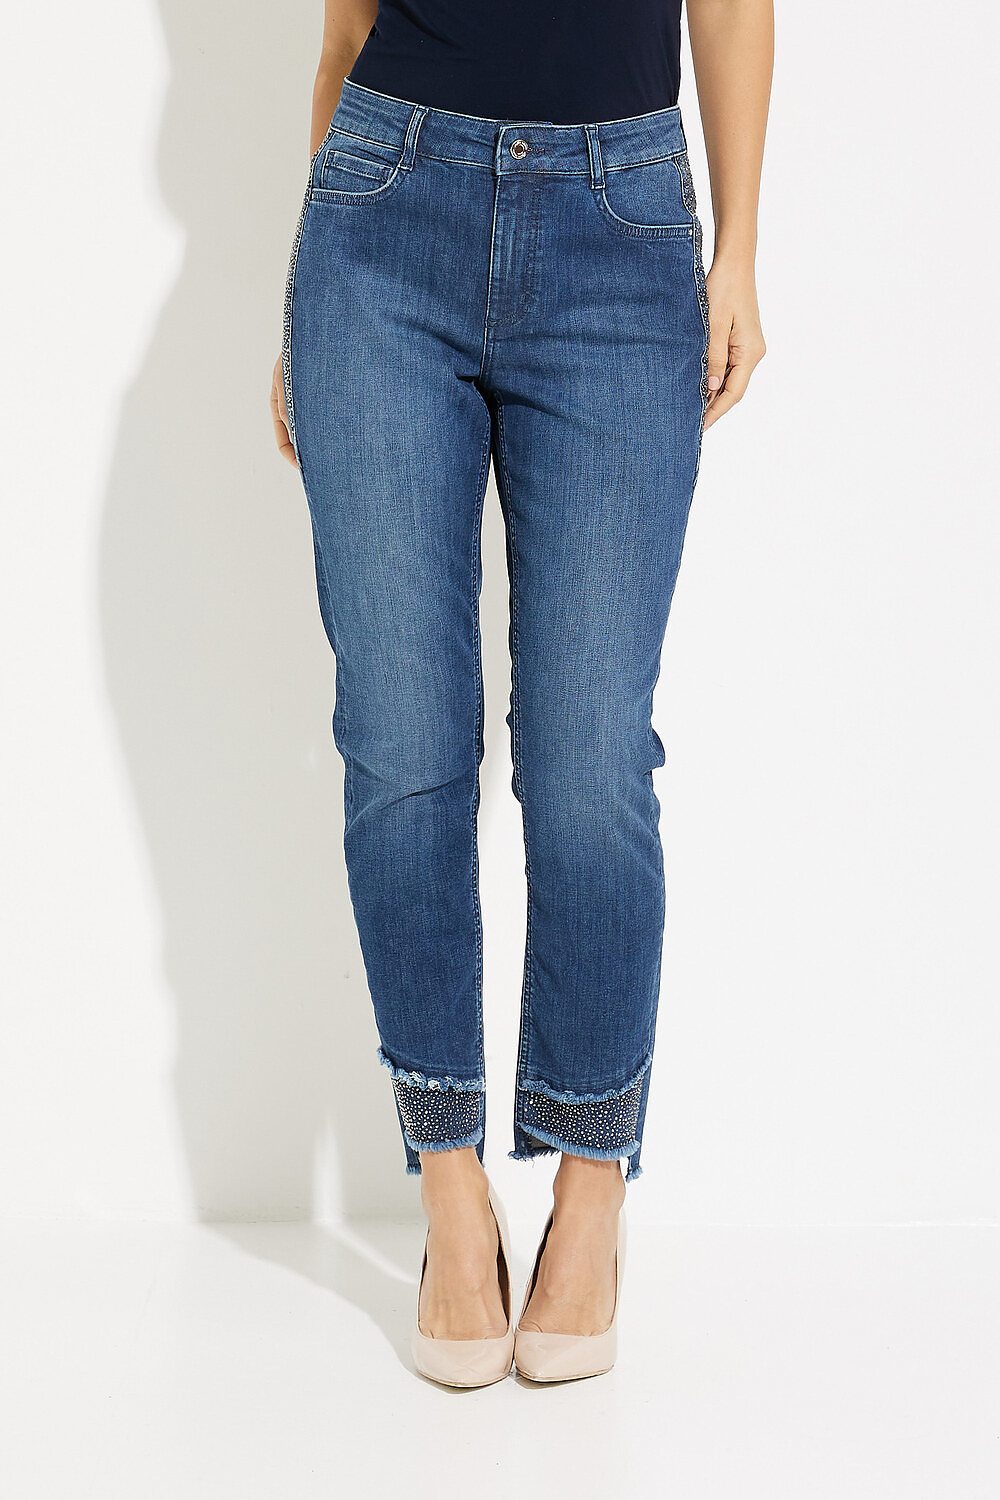 Joseph Ribkoff Embellished Jeans Style 221944. Denim Medium Blue